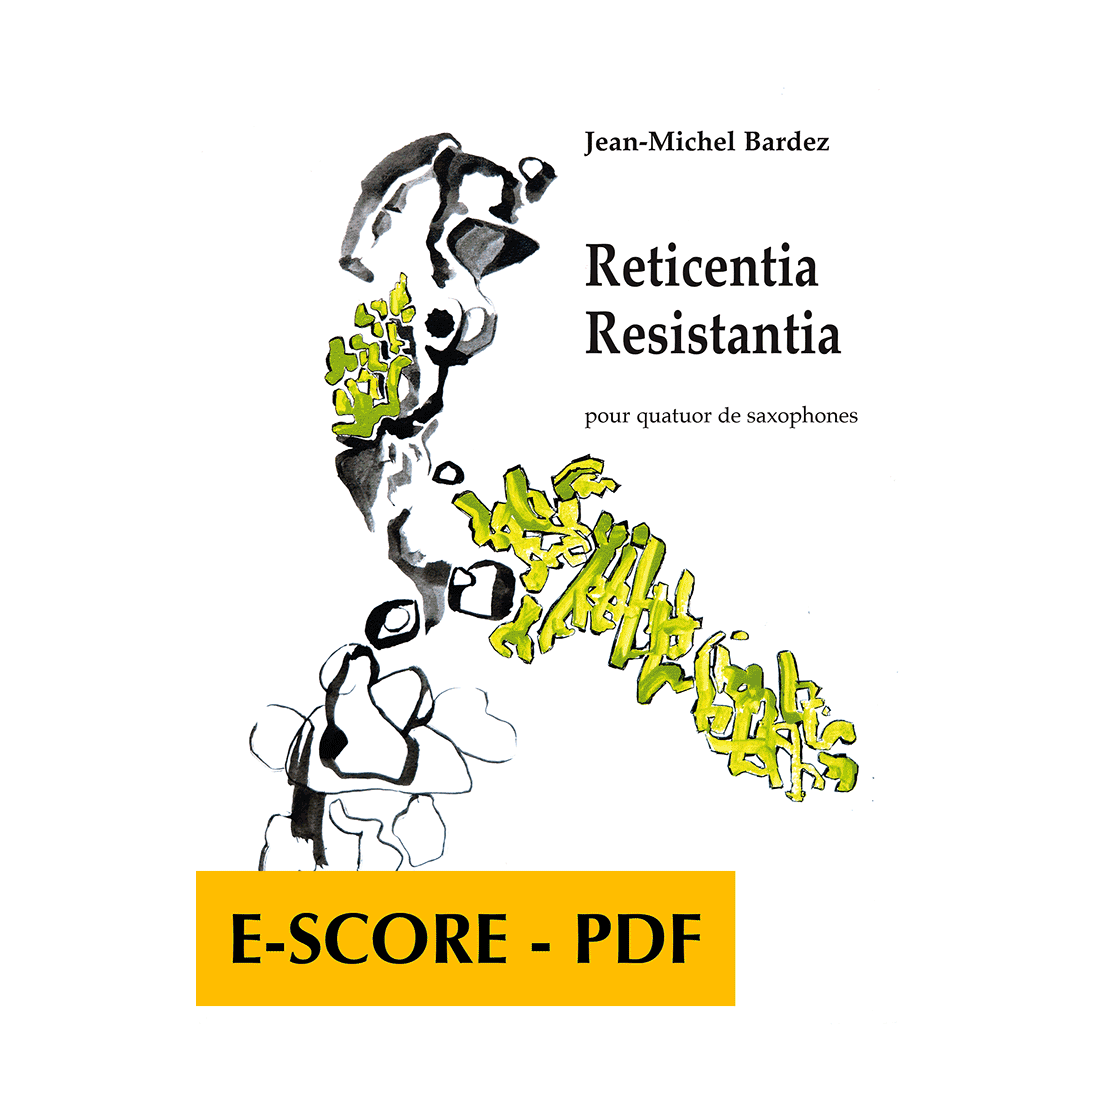 Reticentia resistantia pour quatuor de saxophones - E-score PDF